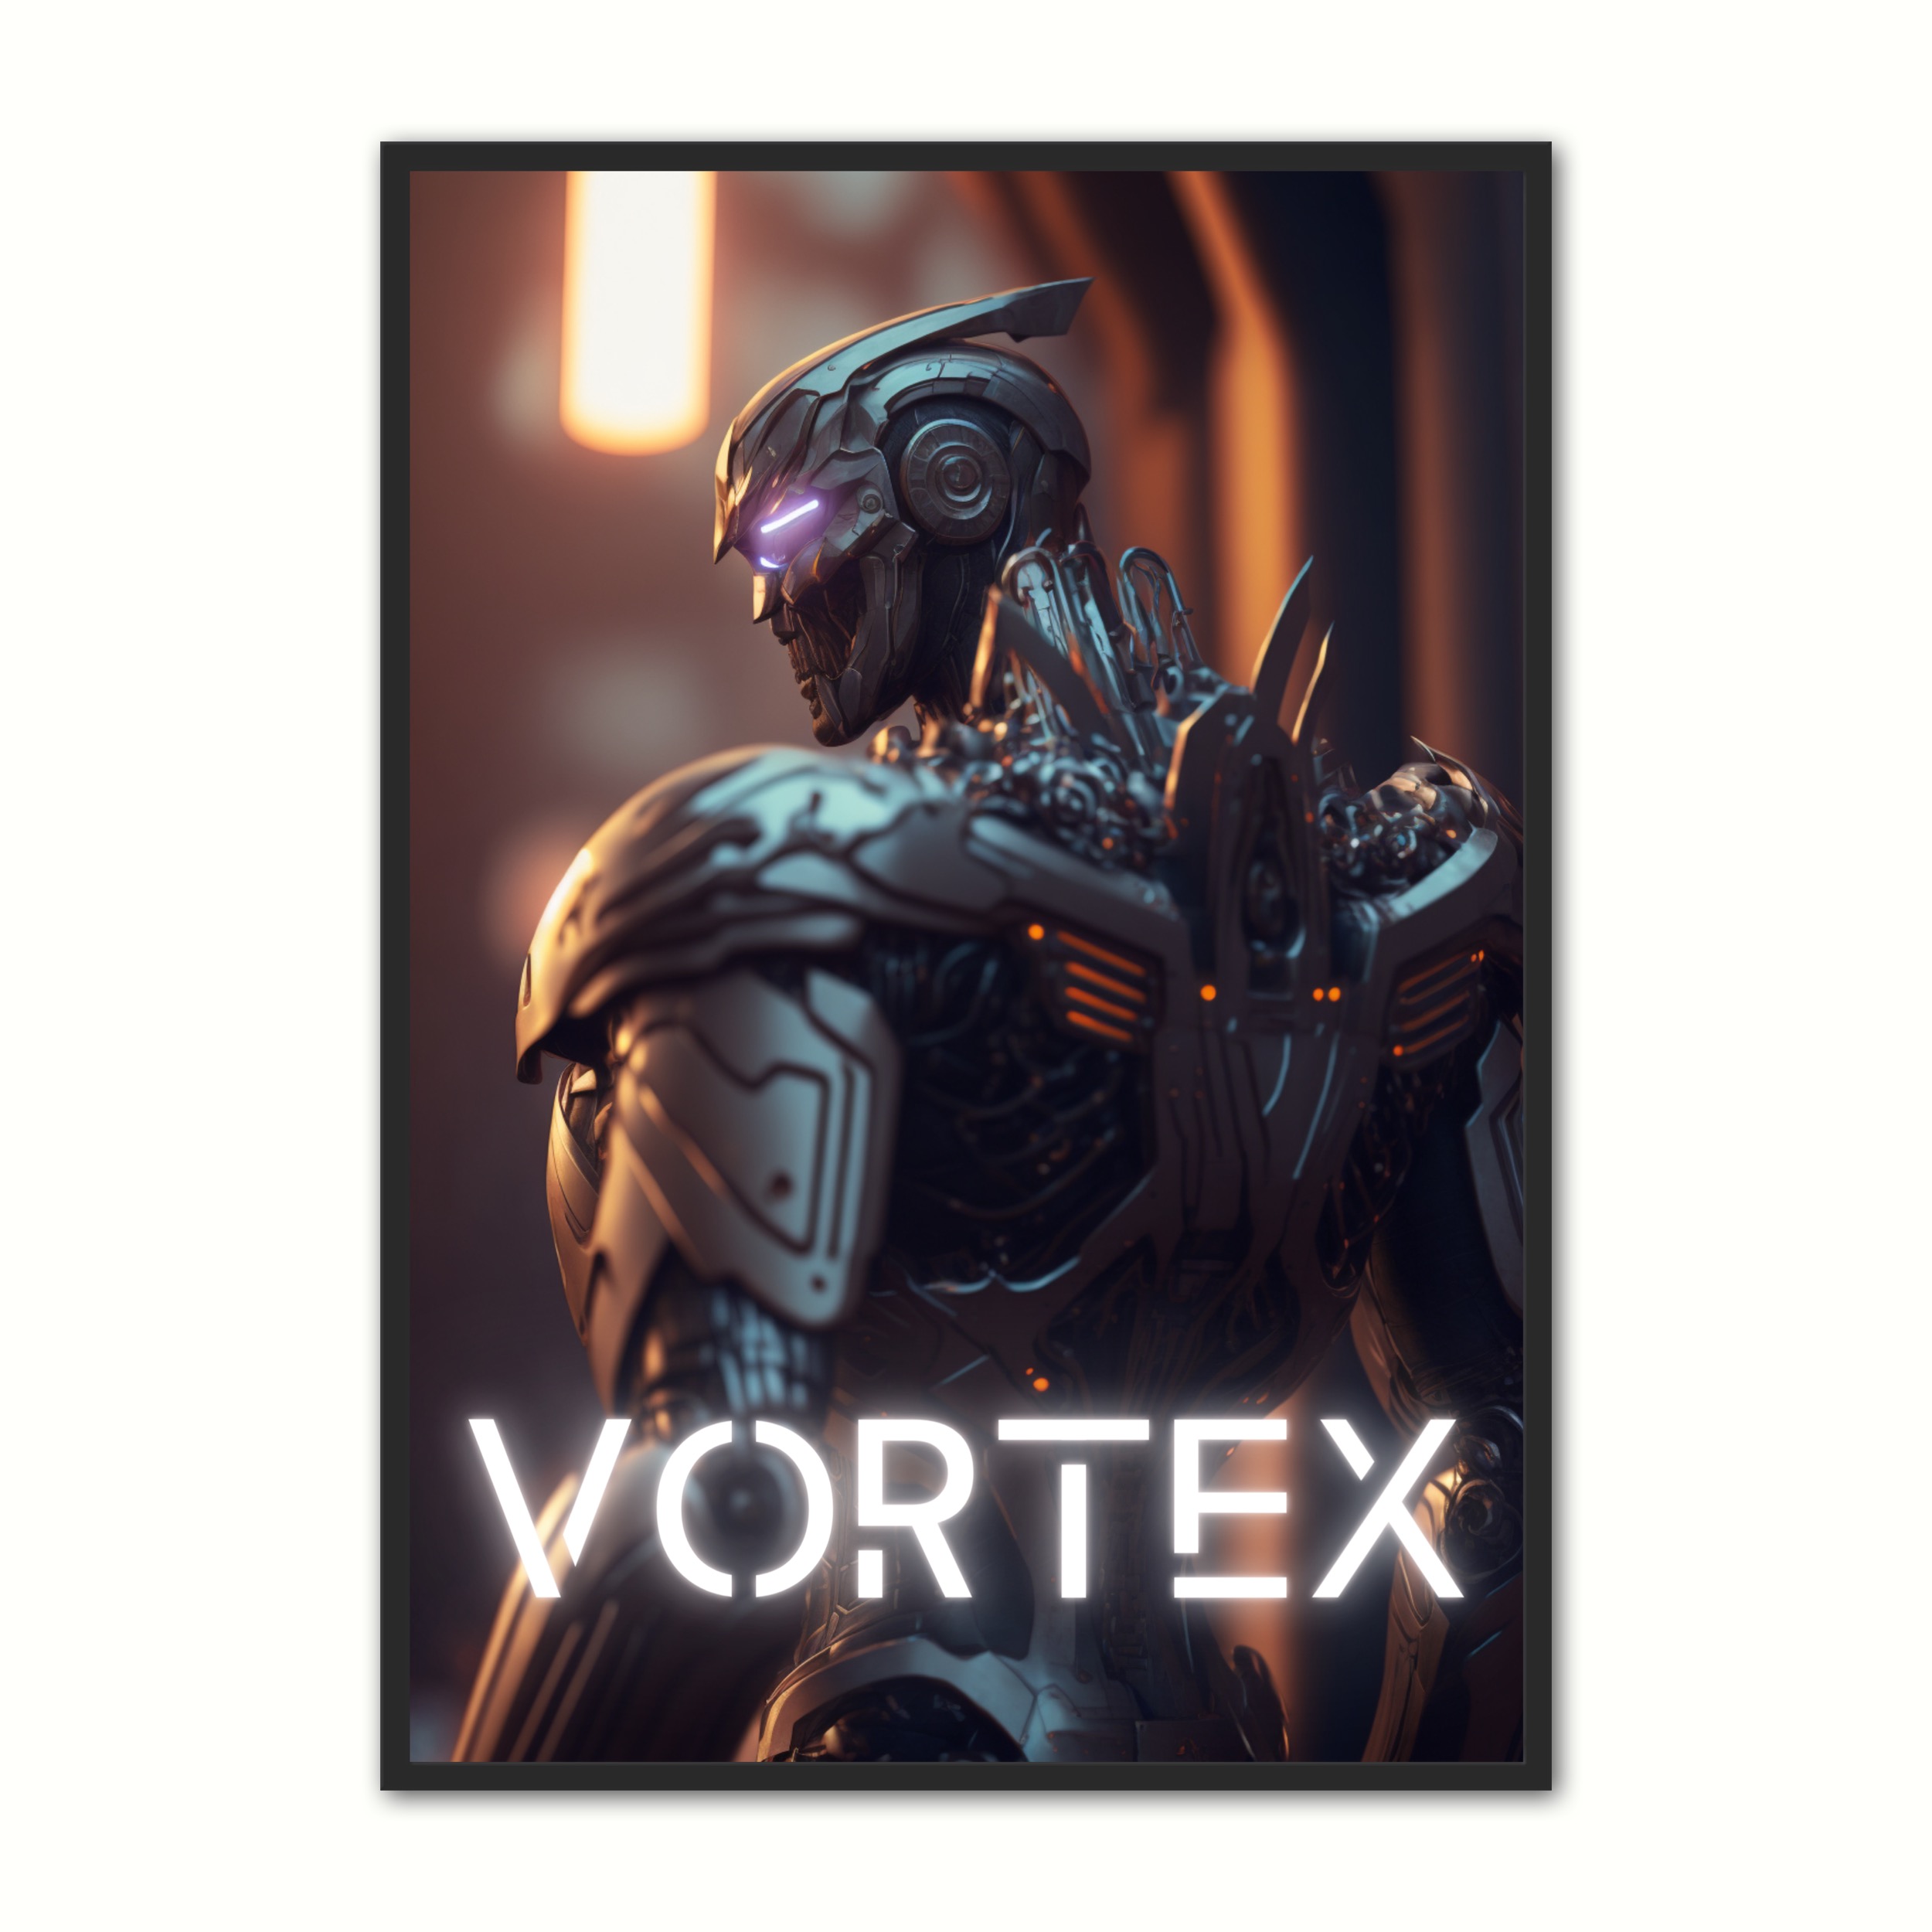 Se Plakat med Vortex - Android 30 x 40 cm hos Nyplakat.dk